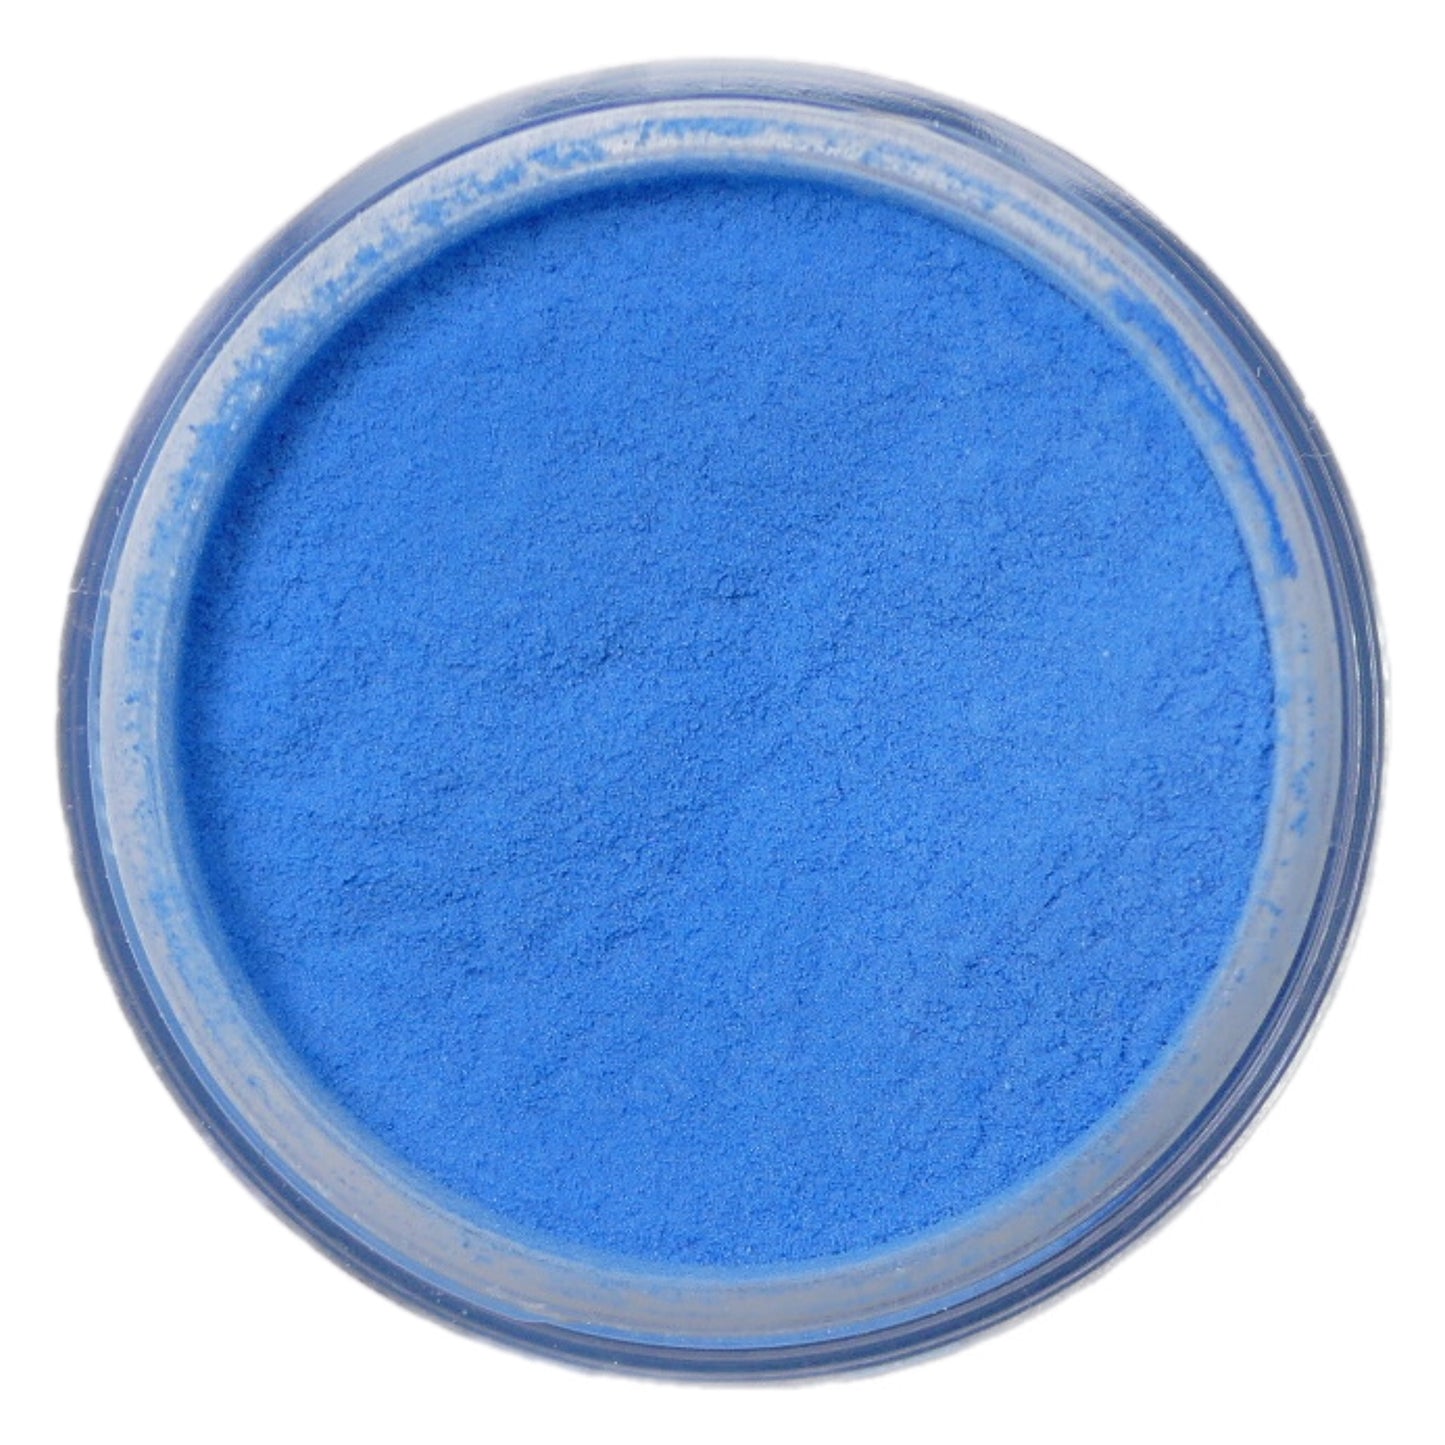 Charisma Nail Acrylic Powder - Blue (6g)